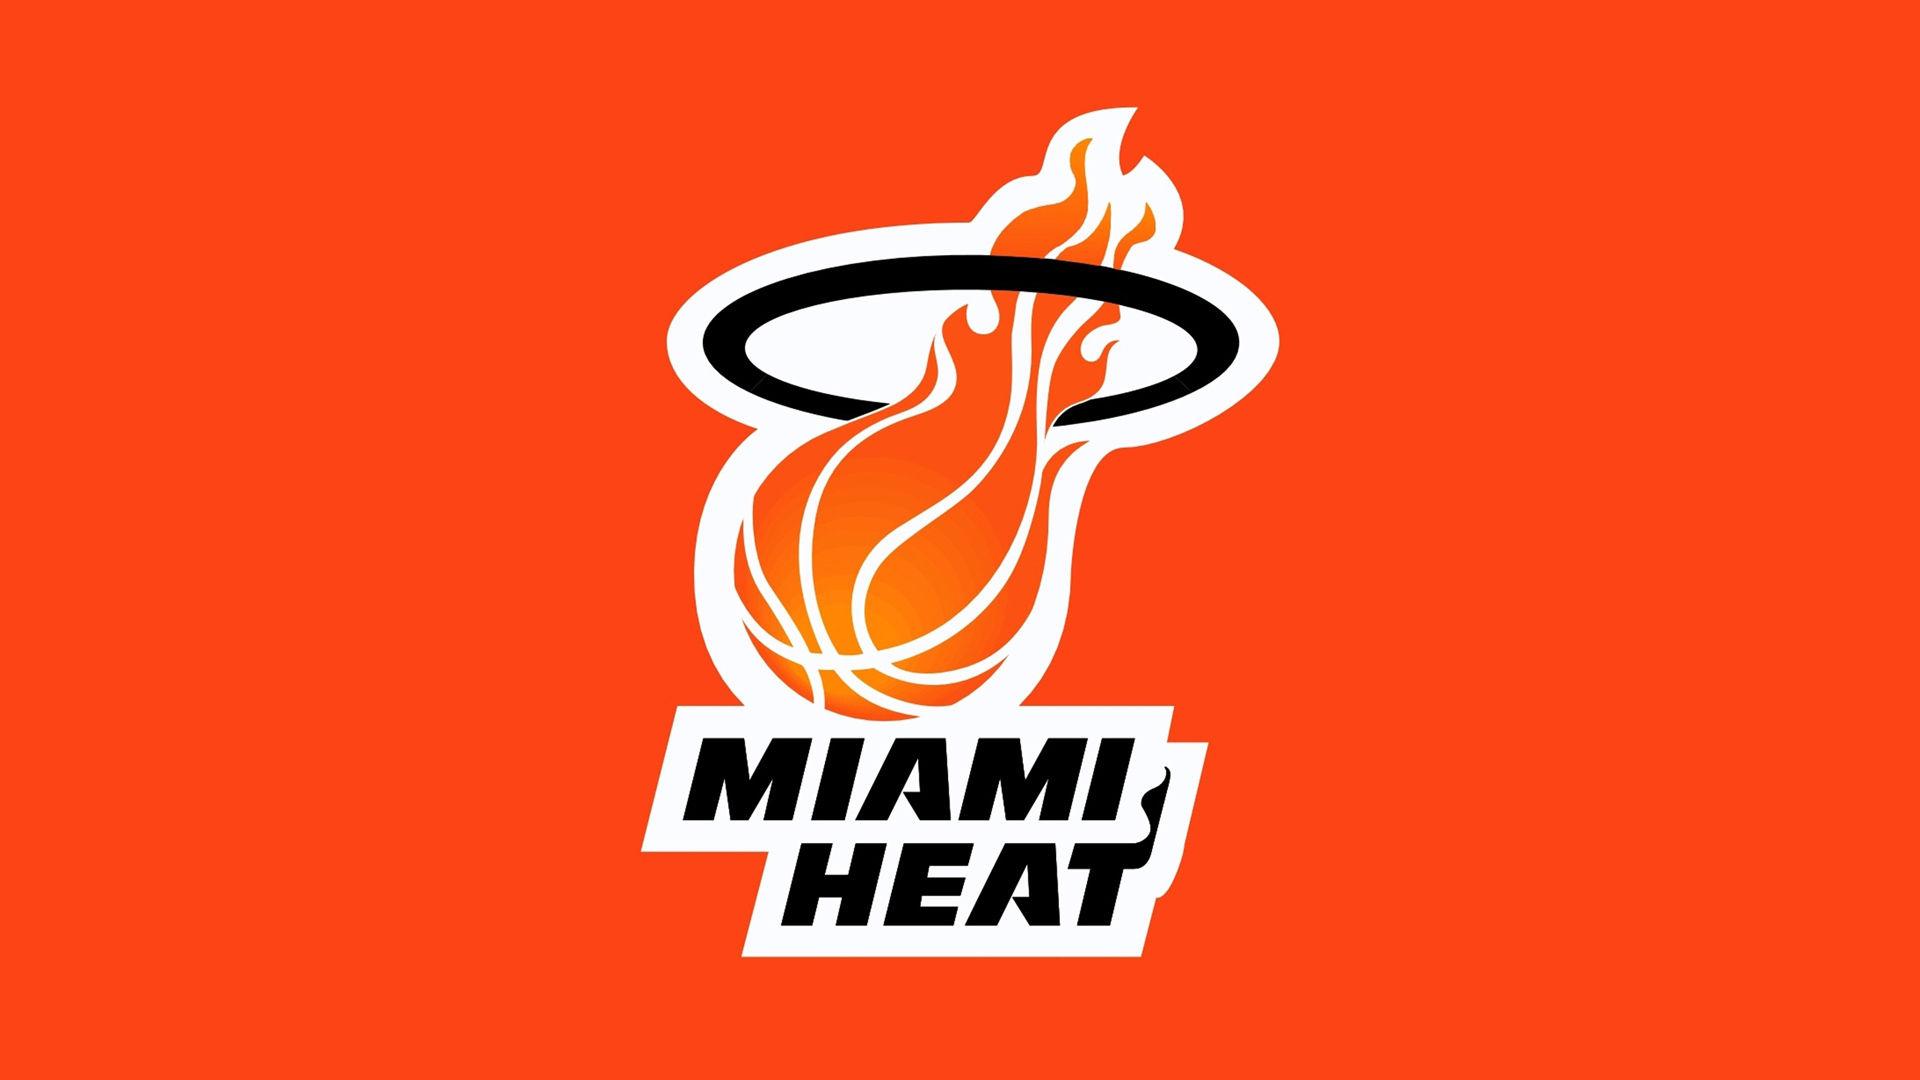 Miami Heat Logo Wallpaper, HD Miami Heat Logo, 1920x1080